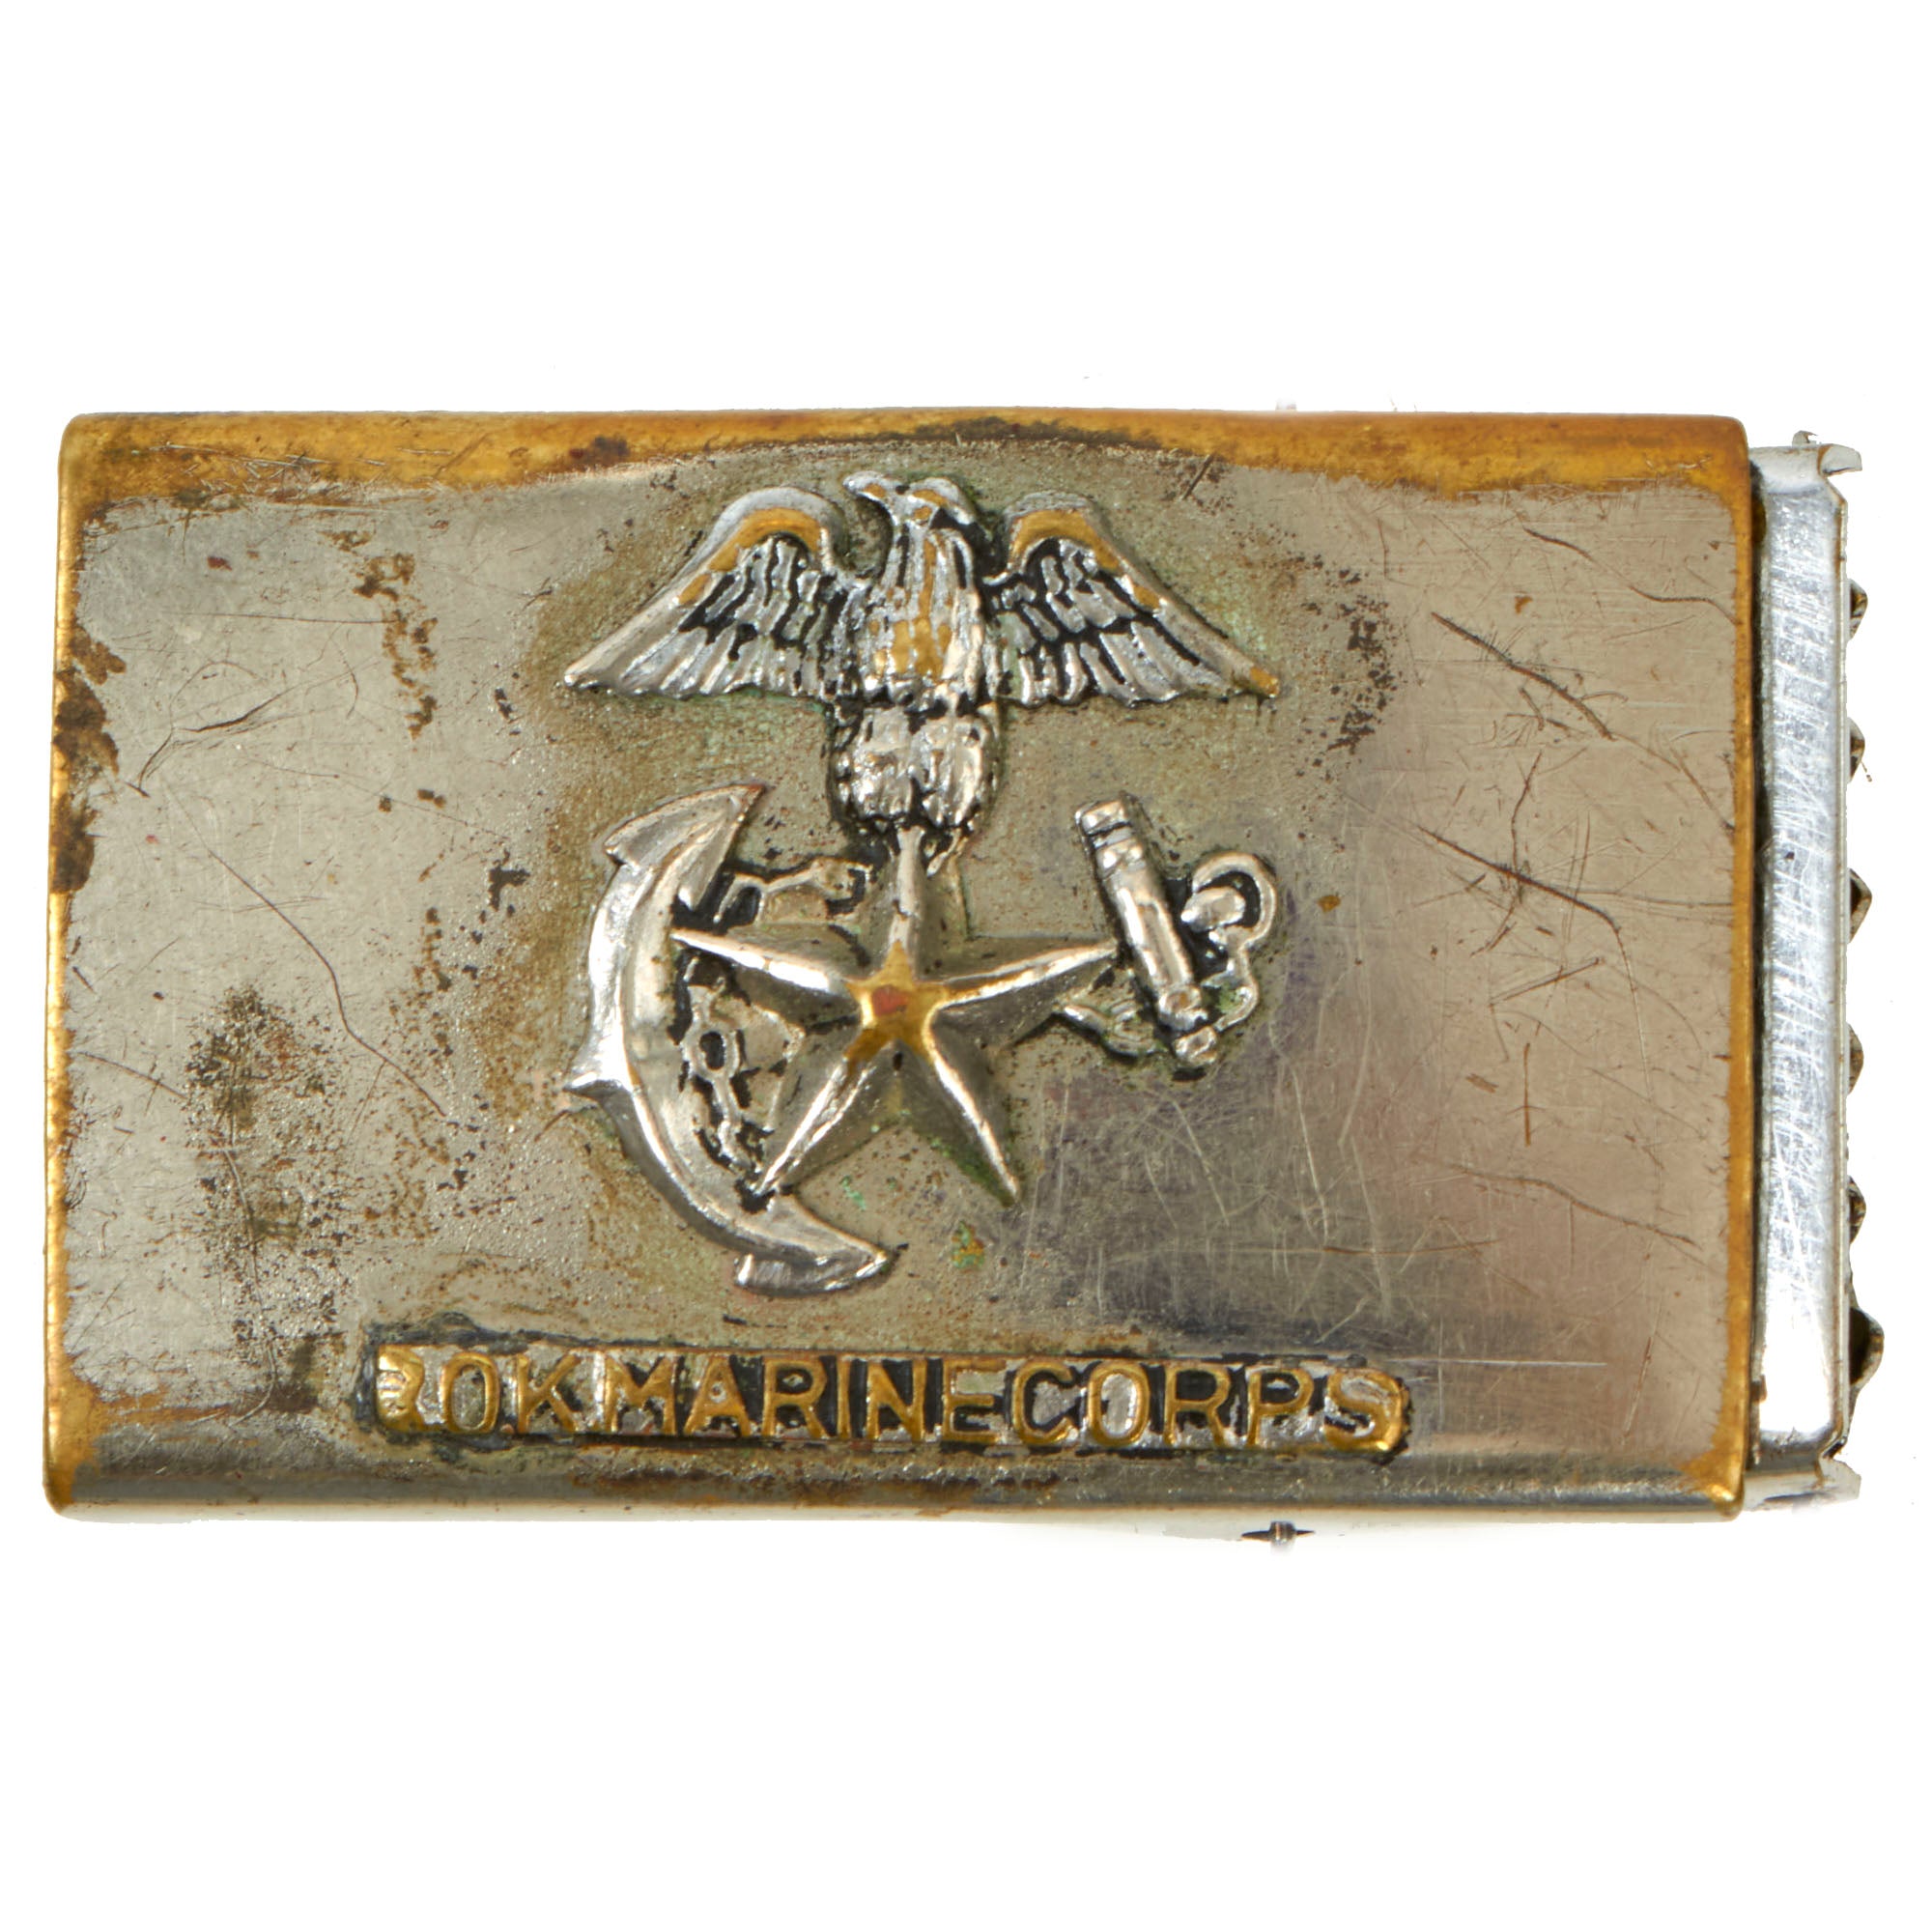 Original U.S. Vietnam War “The Rockpile” (Elliot Combat Base